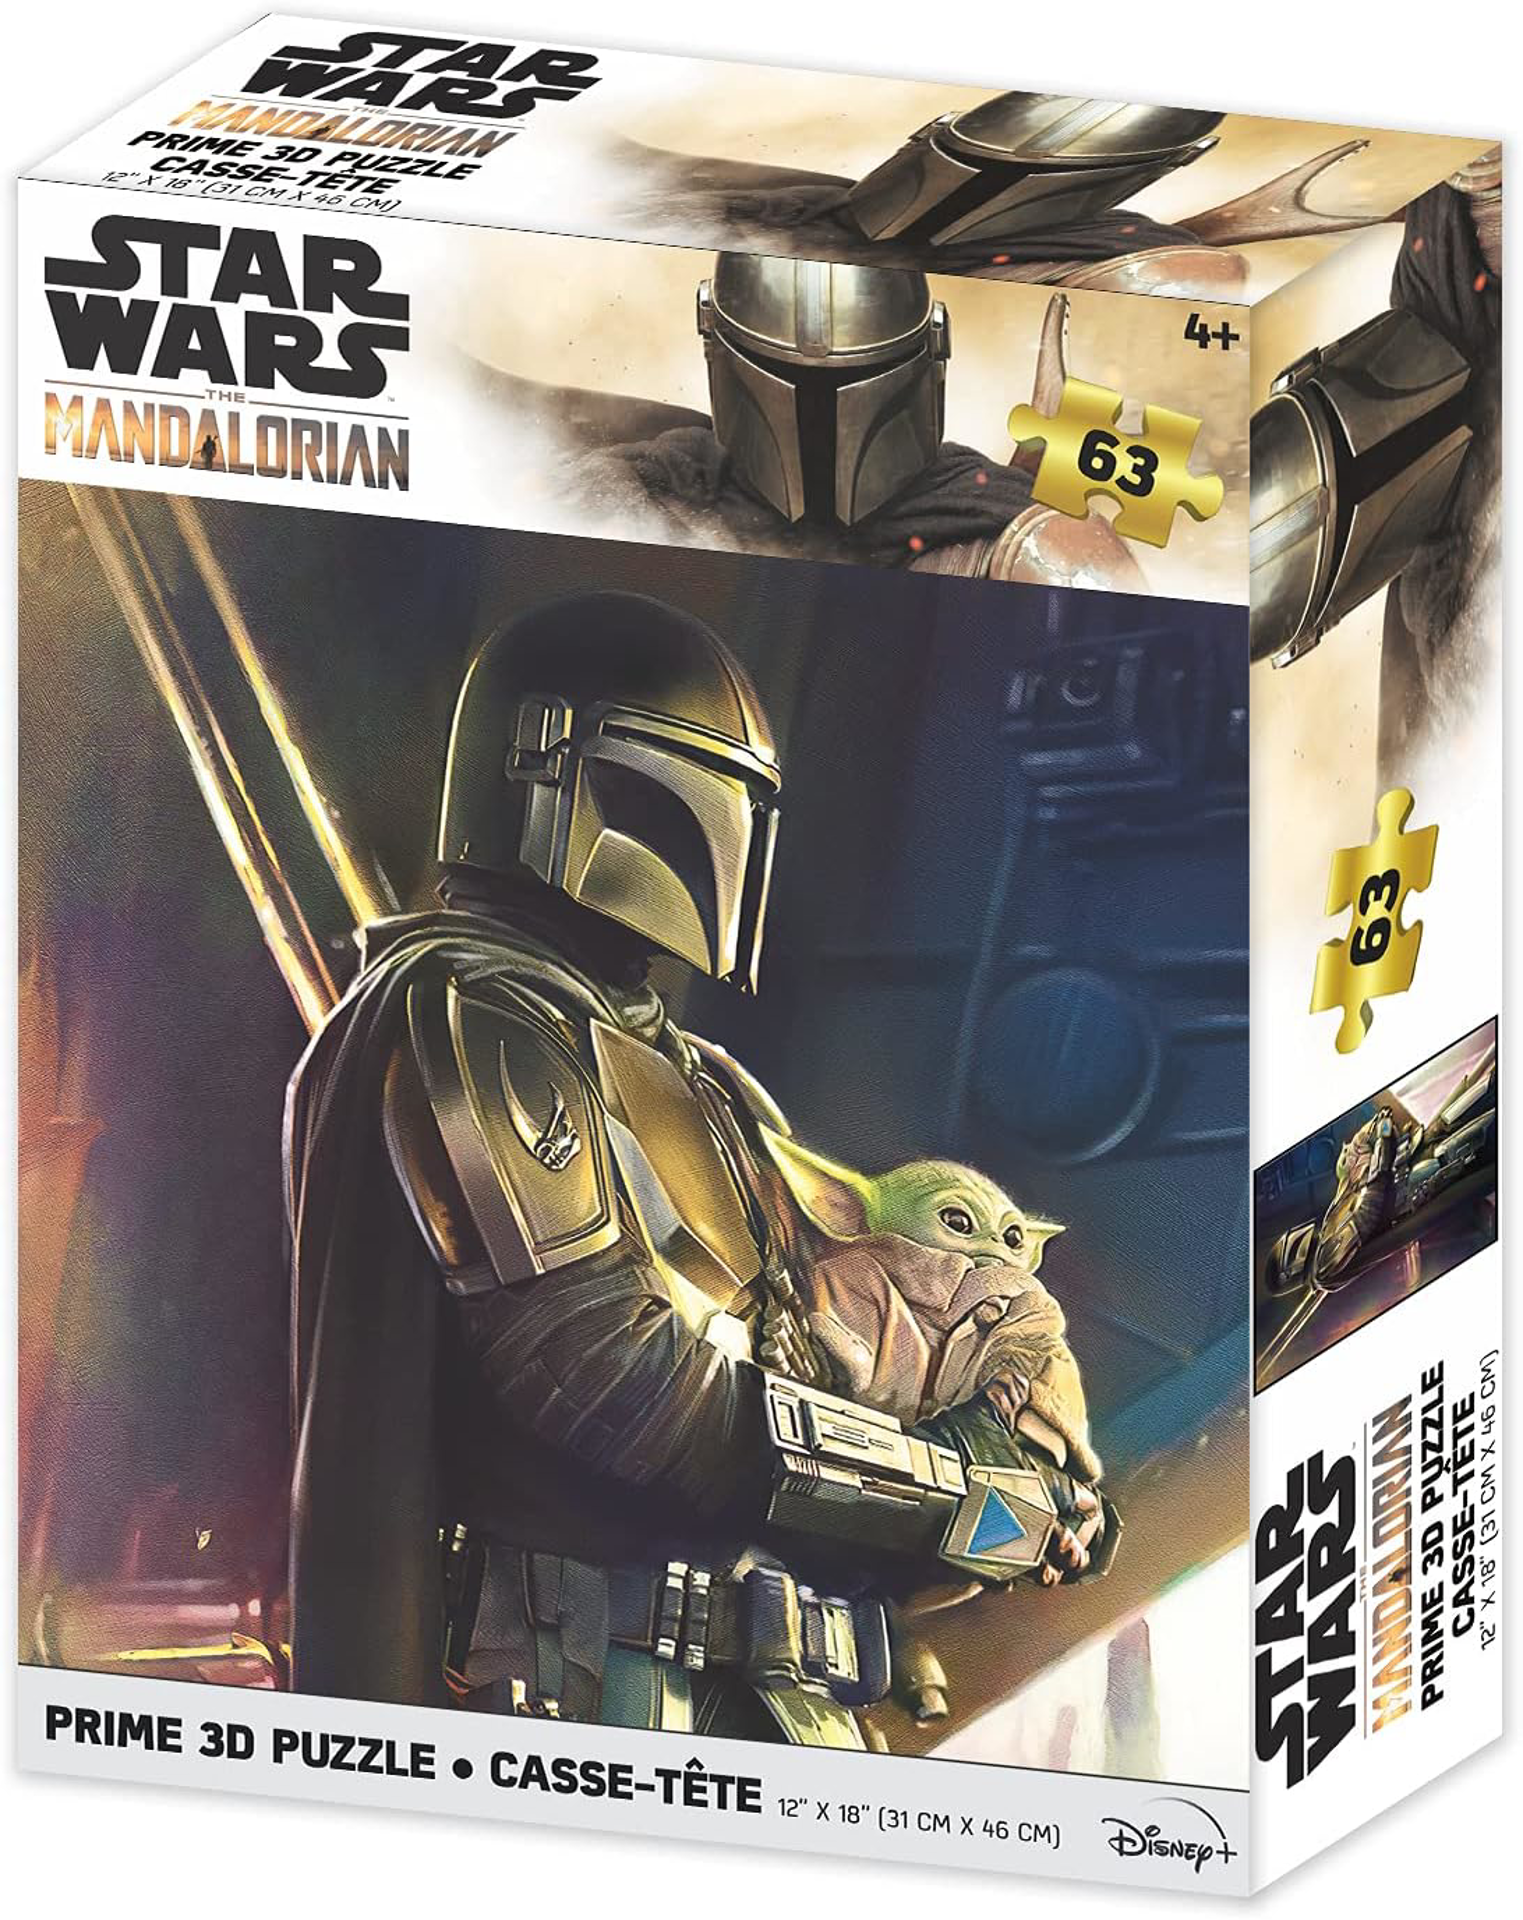 Star Wars: The Mandalorian - Puzzle lenticulaire Mando 63 pcs 46x31 cm